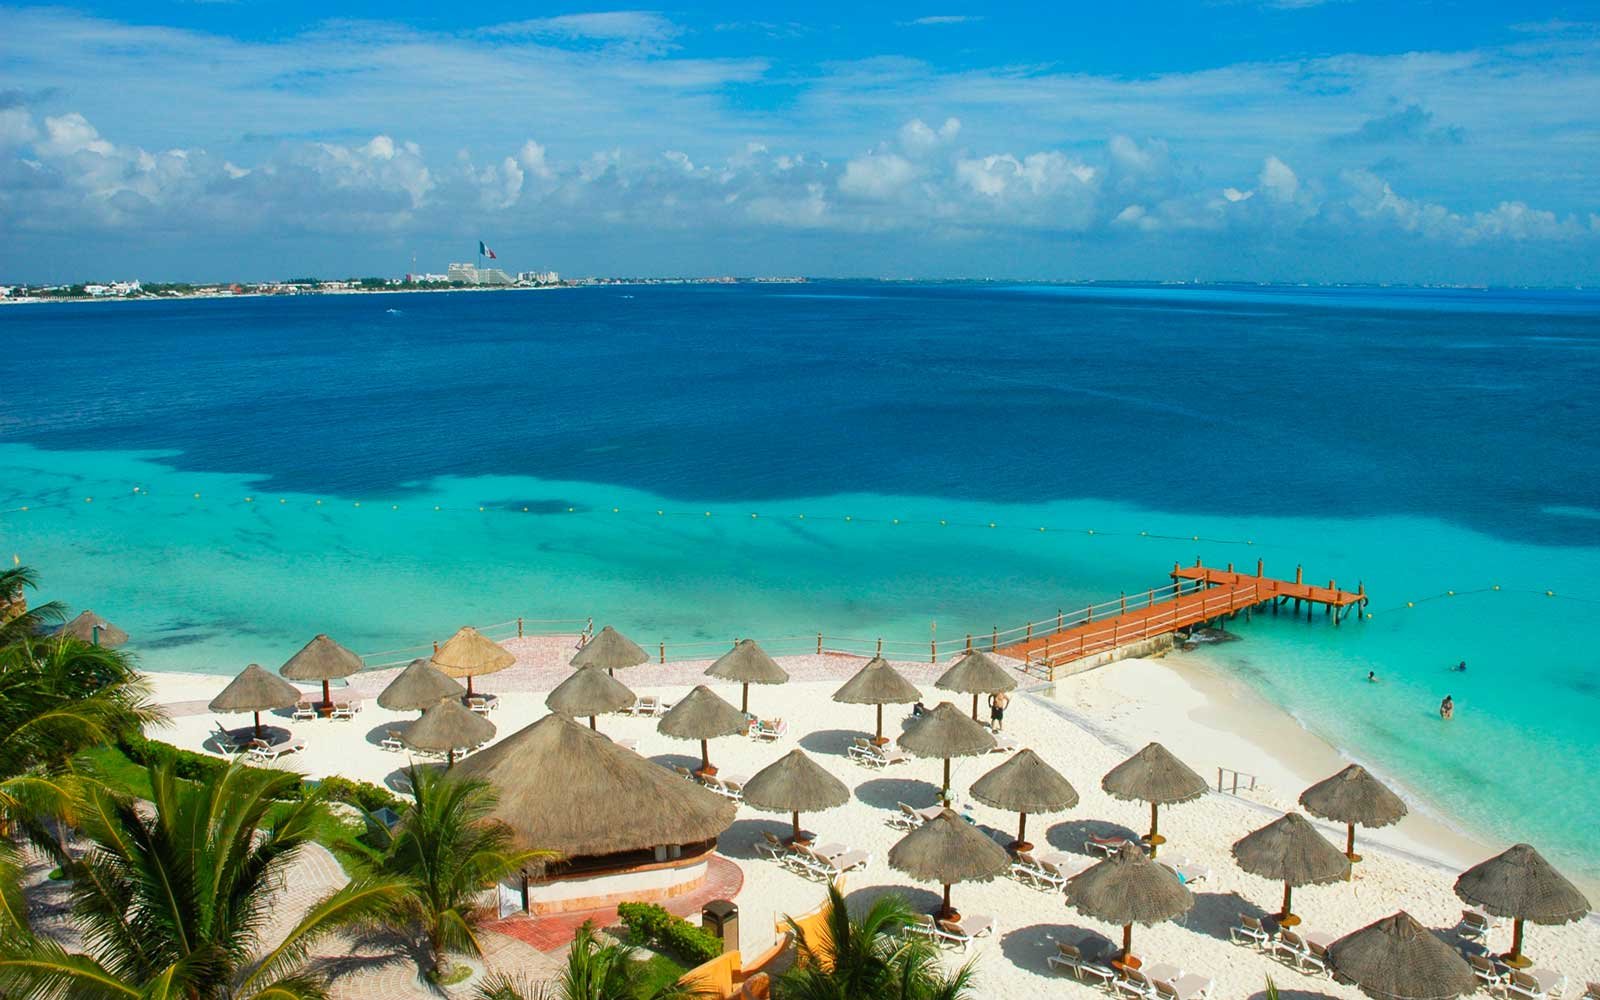 New York to Cancun Mexico $316 RT Nonstop Airfares on Jetblue Basic (Travel September - November 2022)